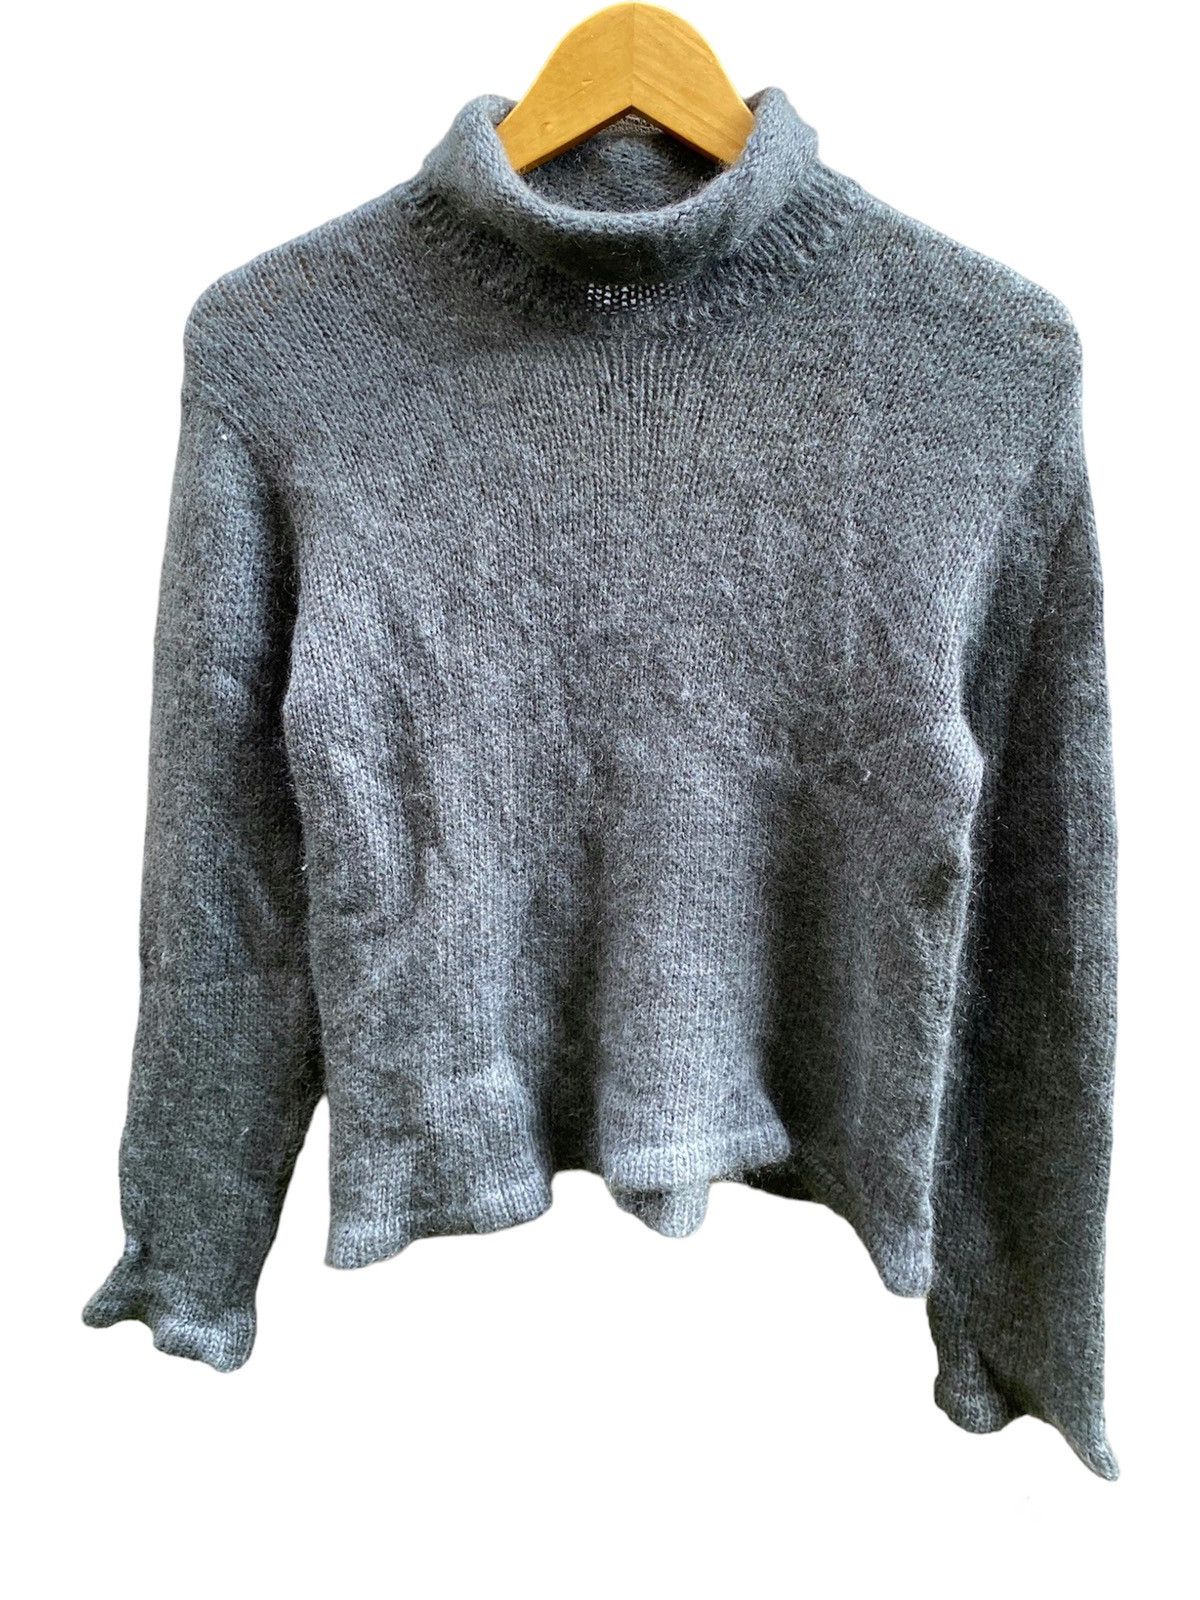 Agnes B. Vintage Agnes B. rollneck Mohair Sweater | Grailed